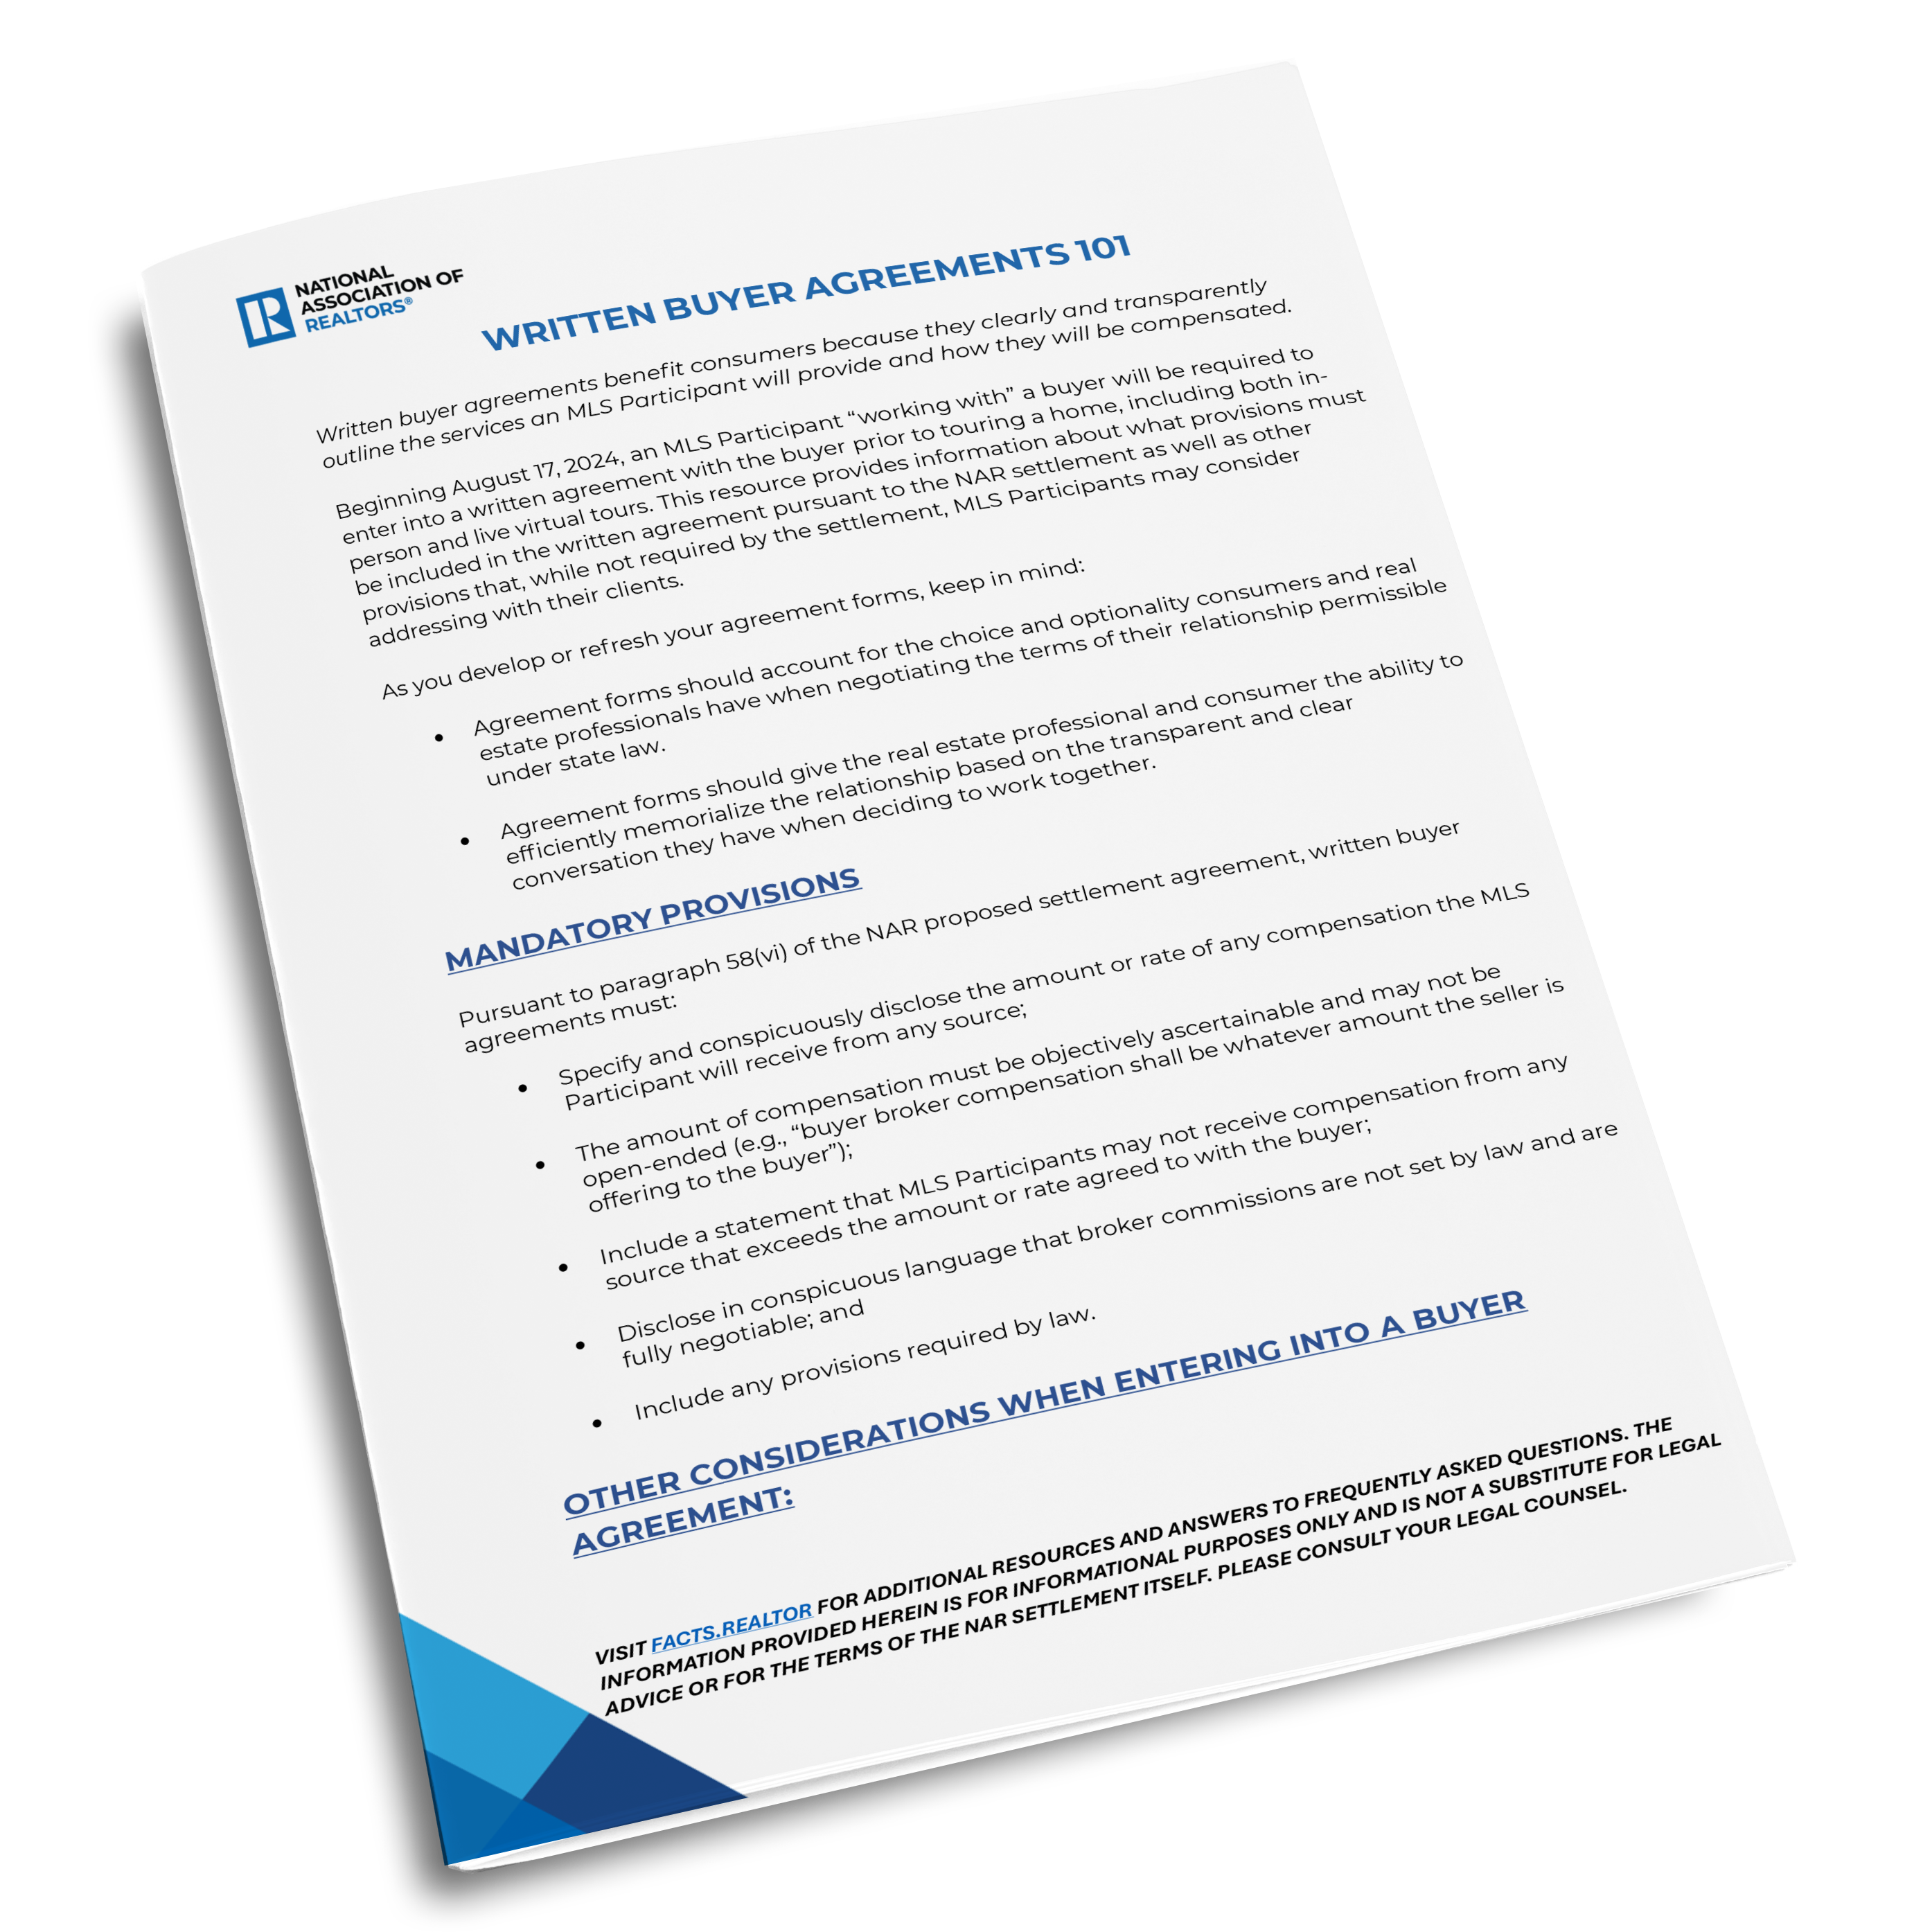 NAR Written Buyer Agreements 101 PDF document